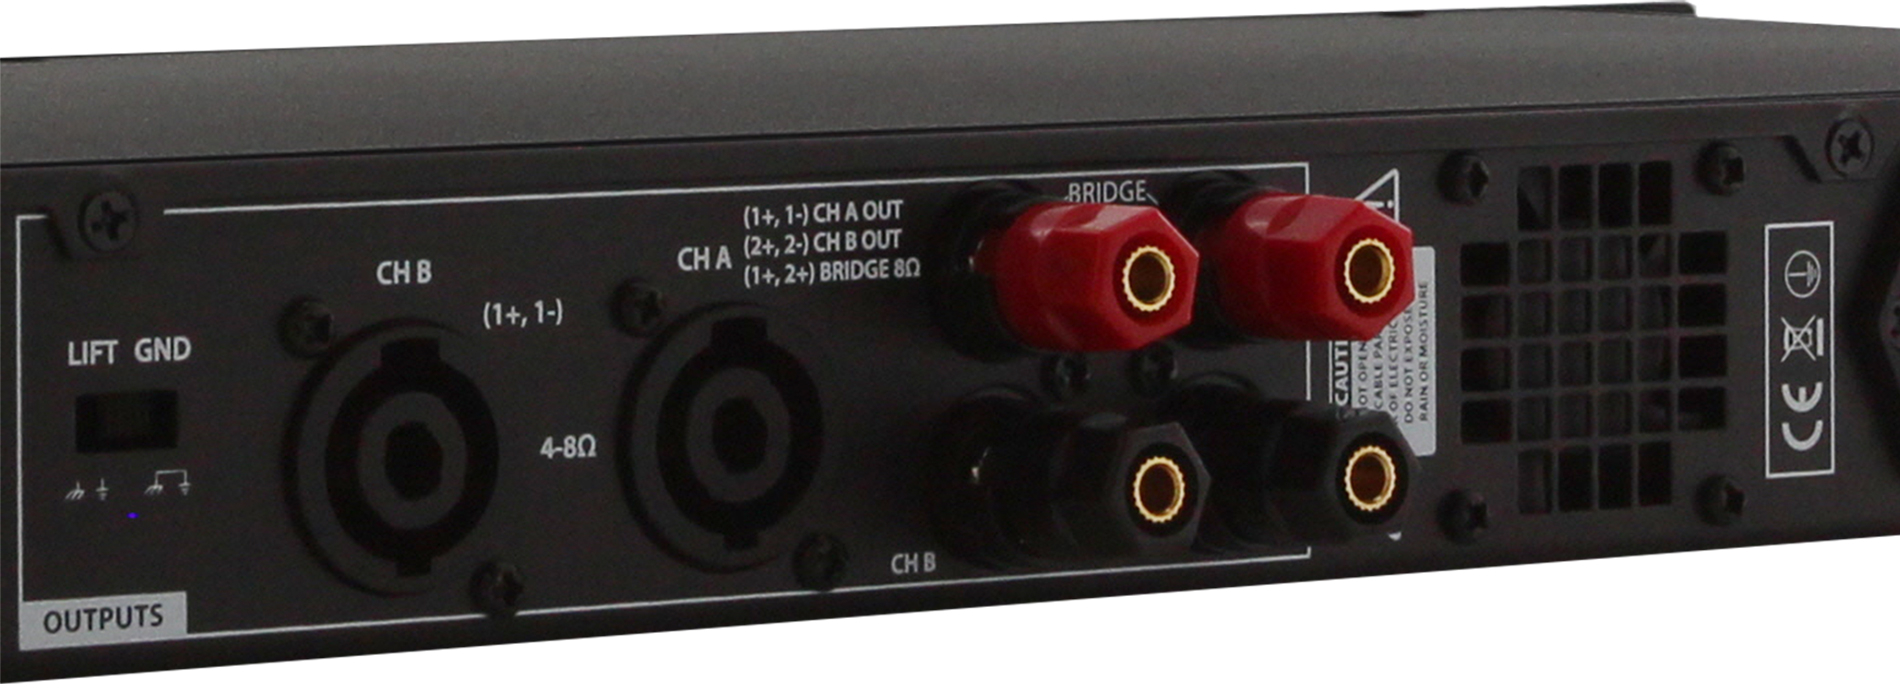 Definitive Audio Ma 1u 2300d - Stereo krachtversterker - Variation 1